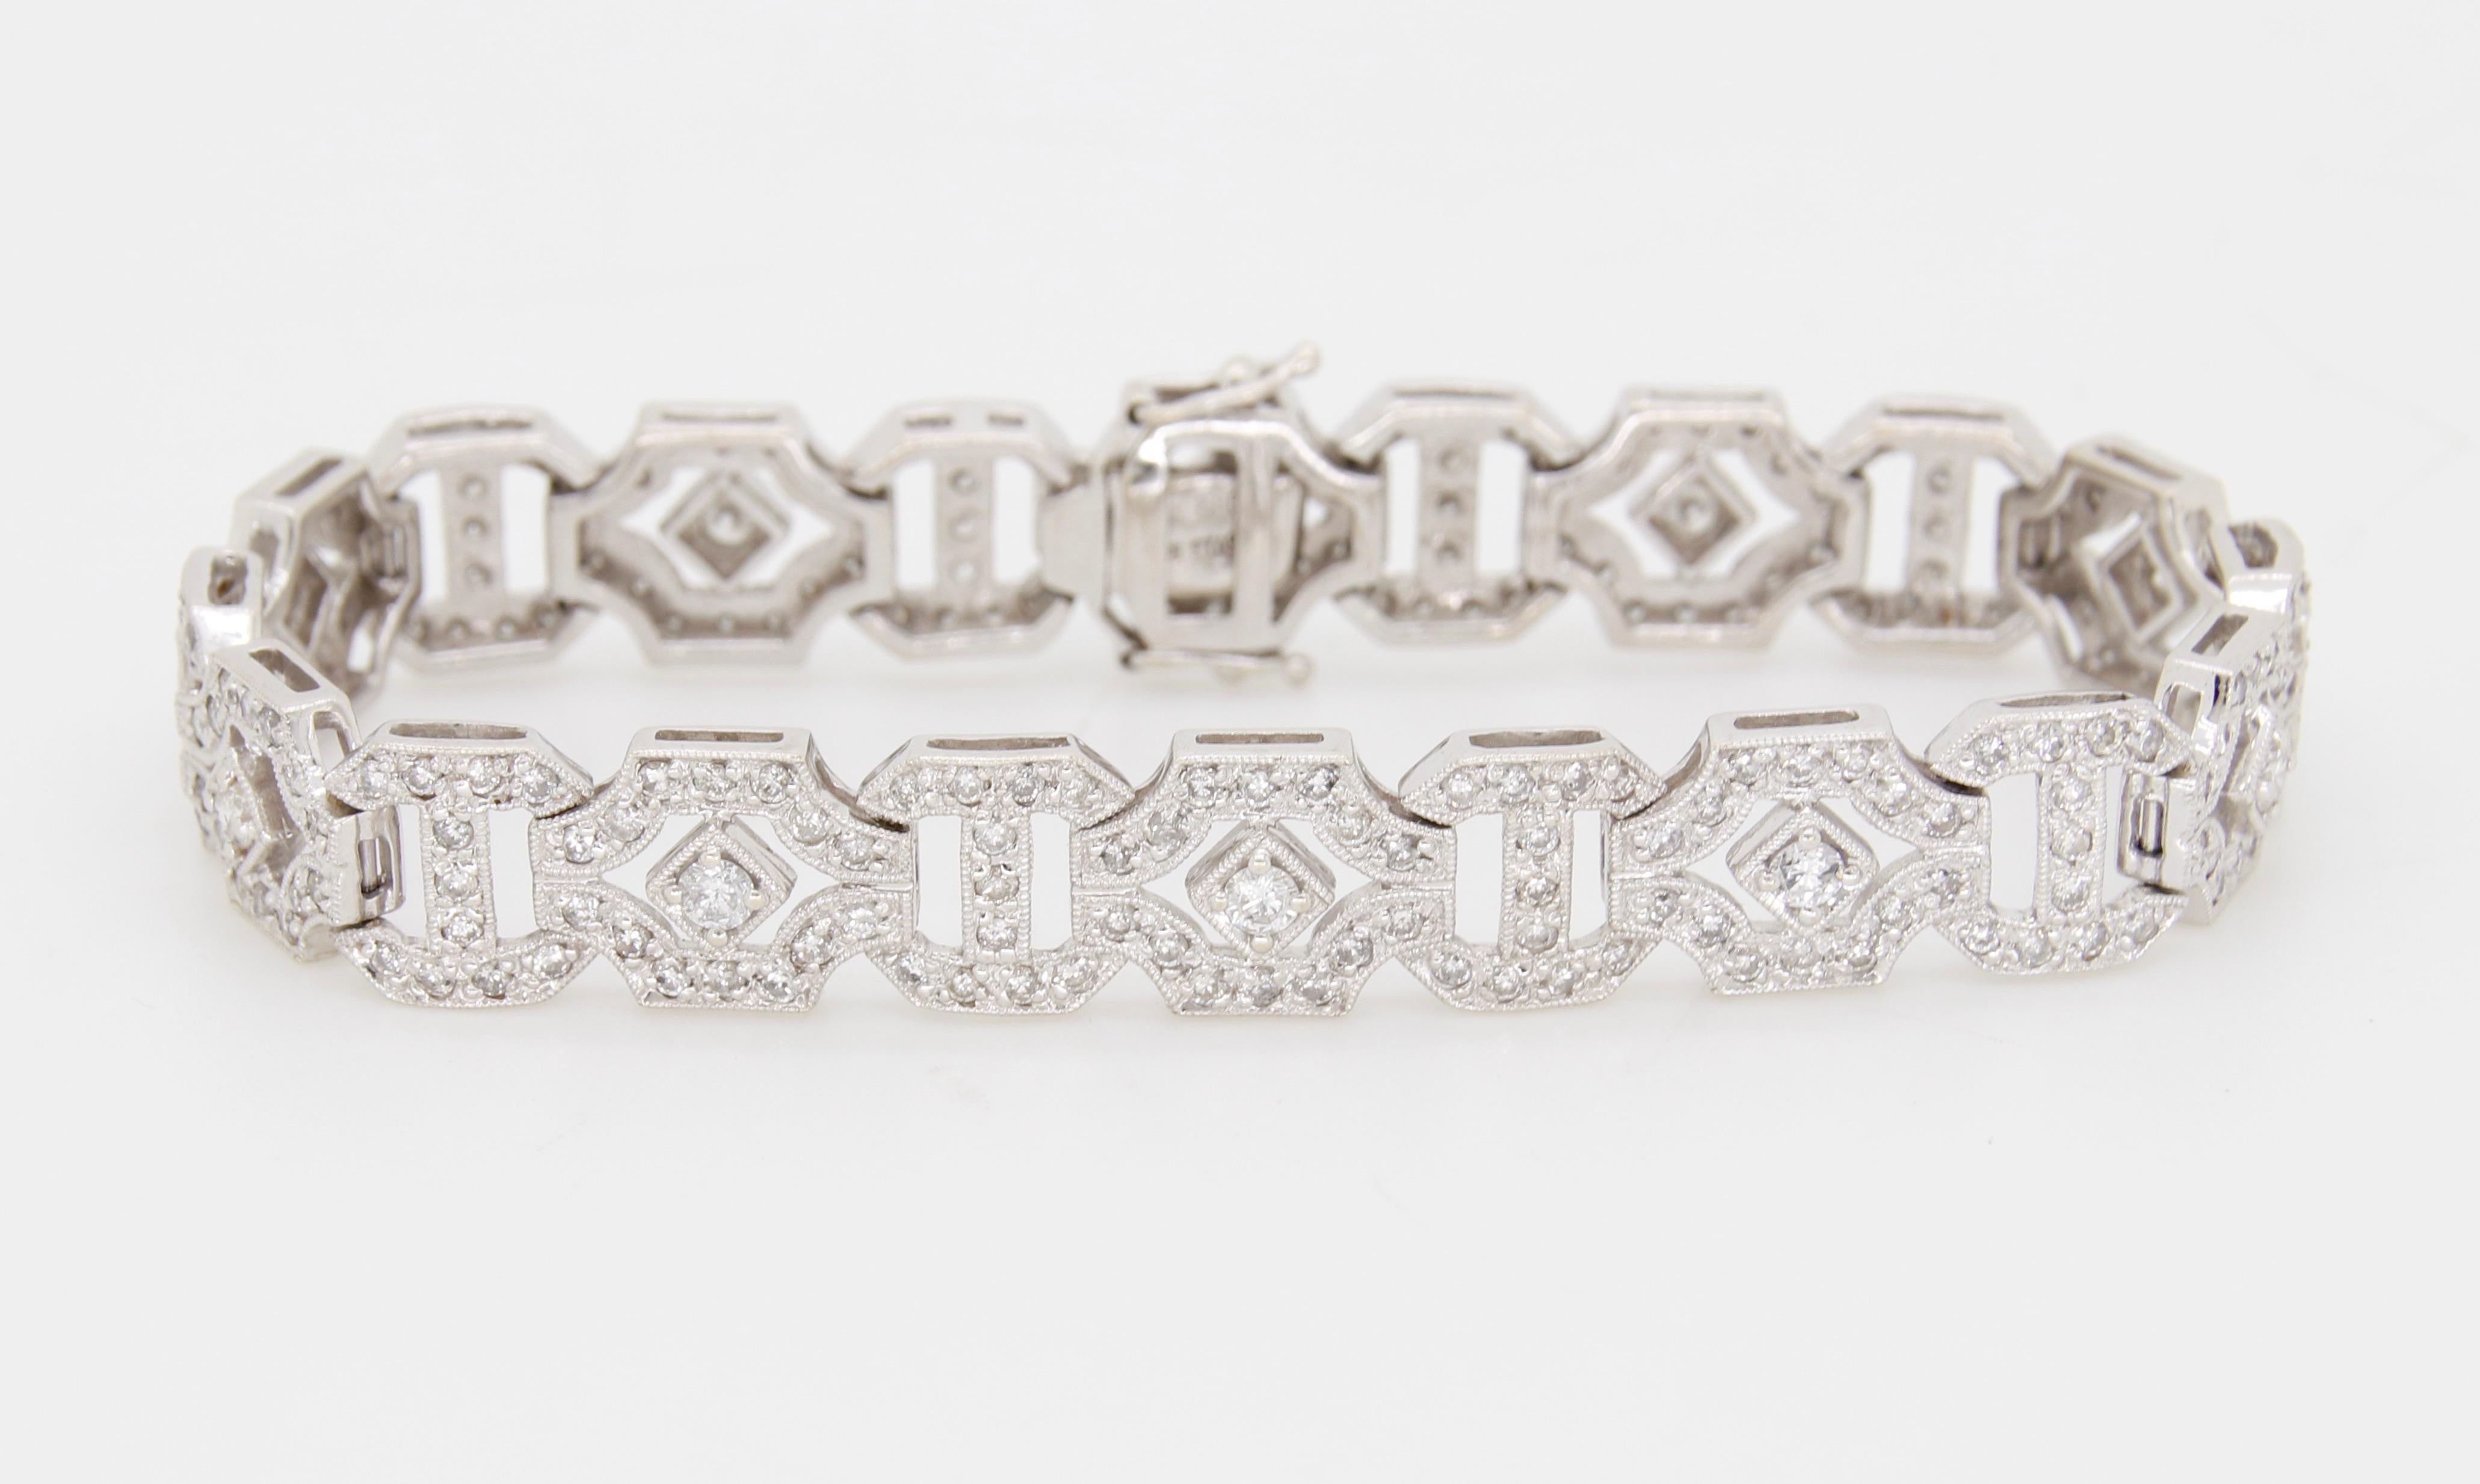 Art Deco style 3.85CTW diamond bracelet made with Round Brilliant cut diamonds in 14k white gold. 

Diamond Carat Weight: Approximately 3.85CTW
Diamond Cut: Round Brilliant Cut     
Color: Average: G-H
Clarity: Average: SI-I
Metal: 14K White